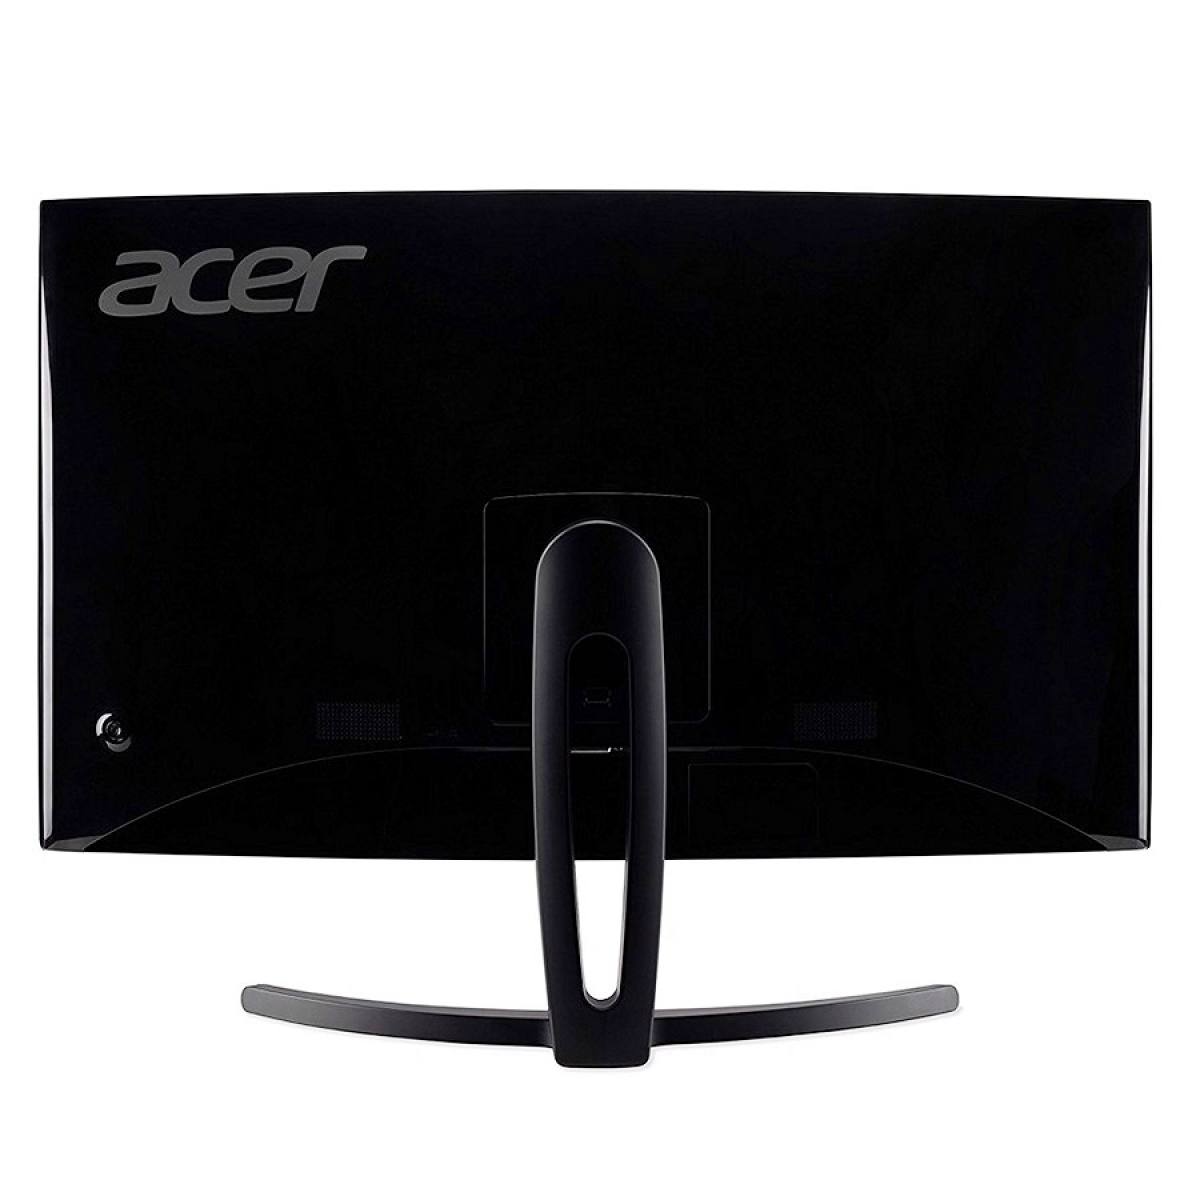 Màn hình Acer ED273A - 144hz (cong)